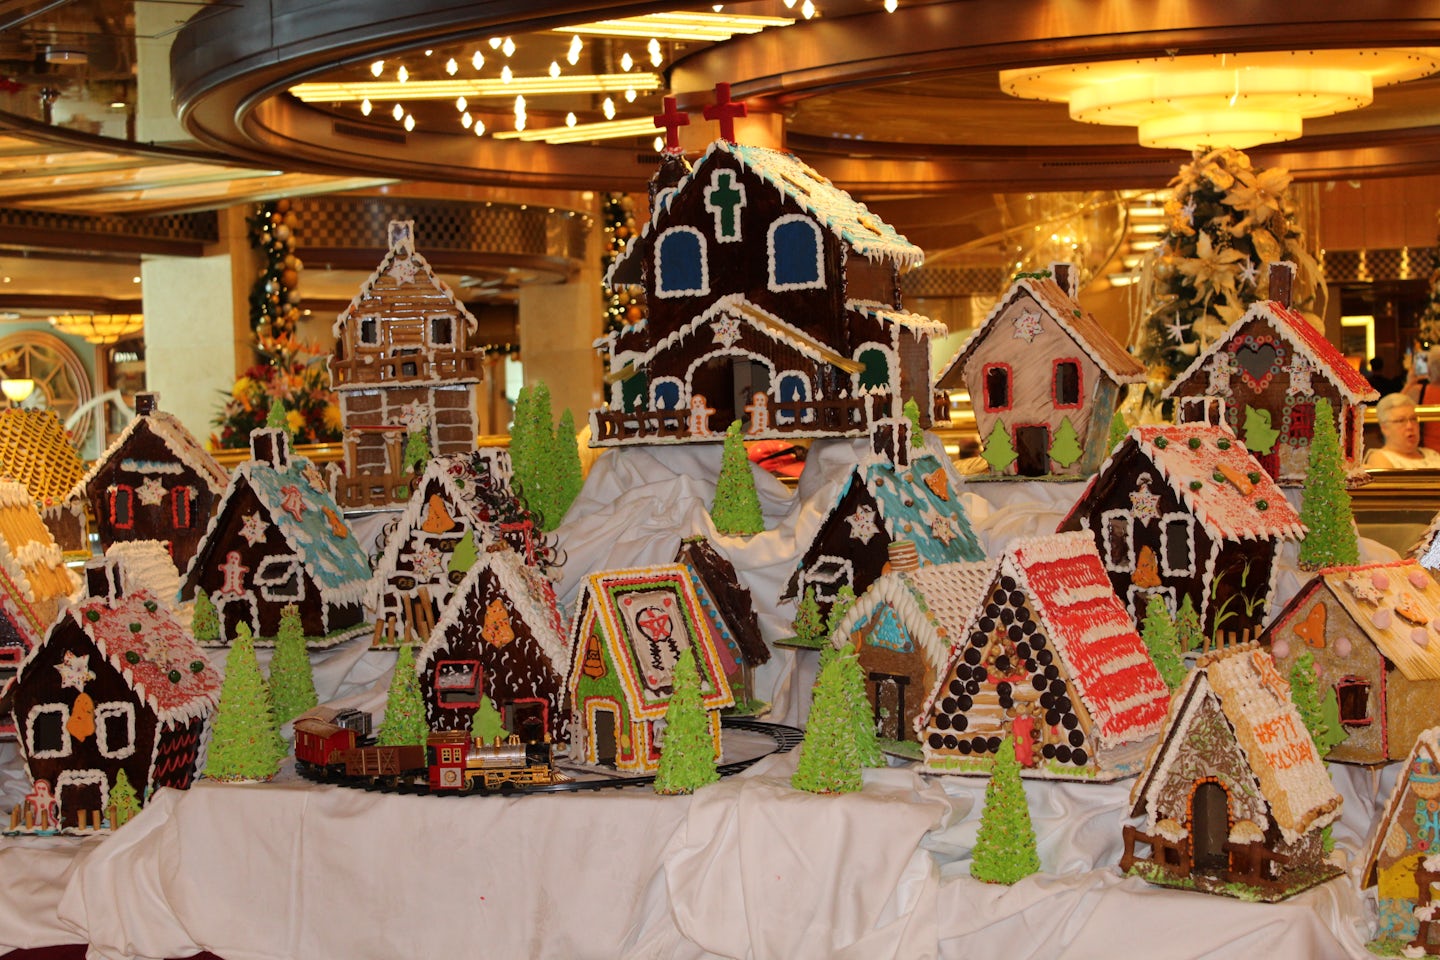 Gingerbread House display